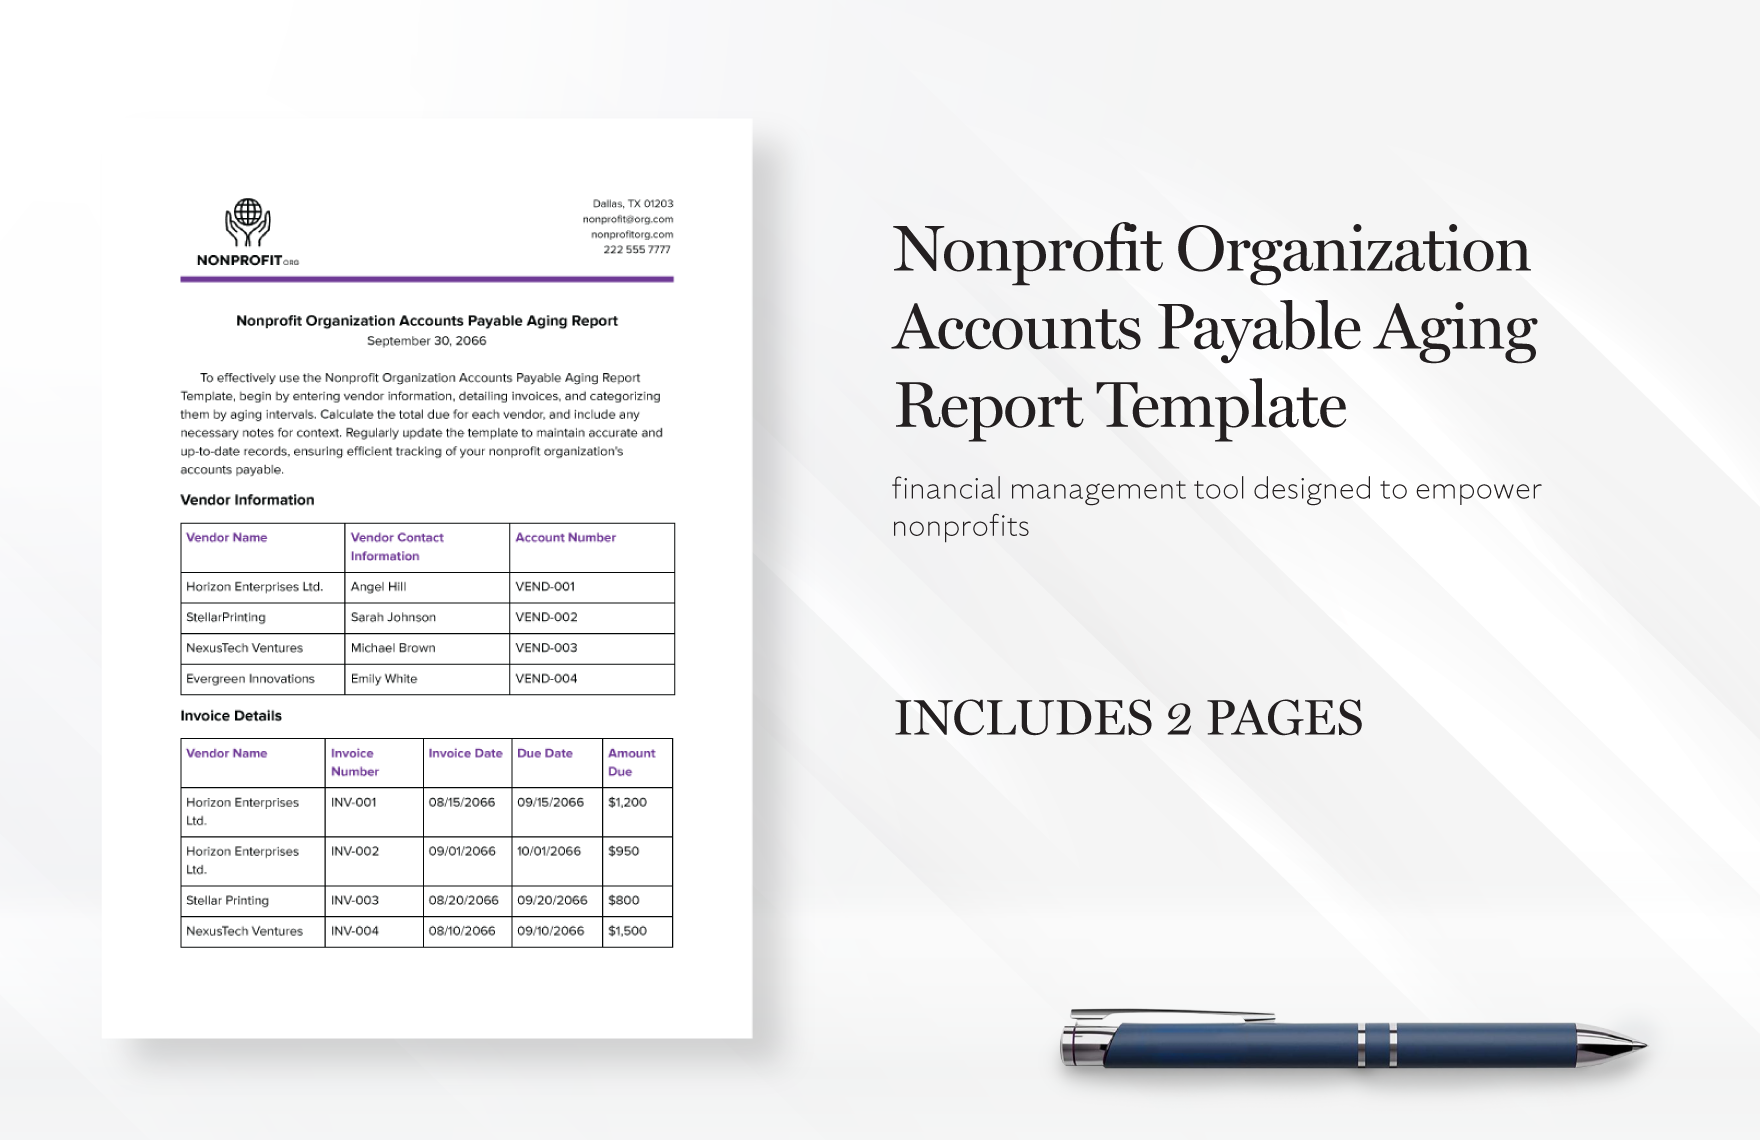 Nonprofit Organization Accounts Payable Aging Report Template